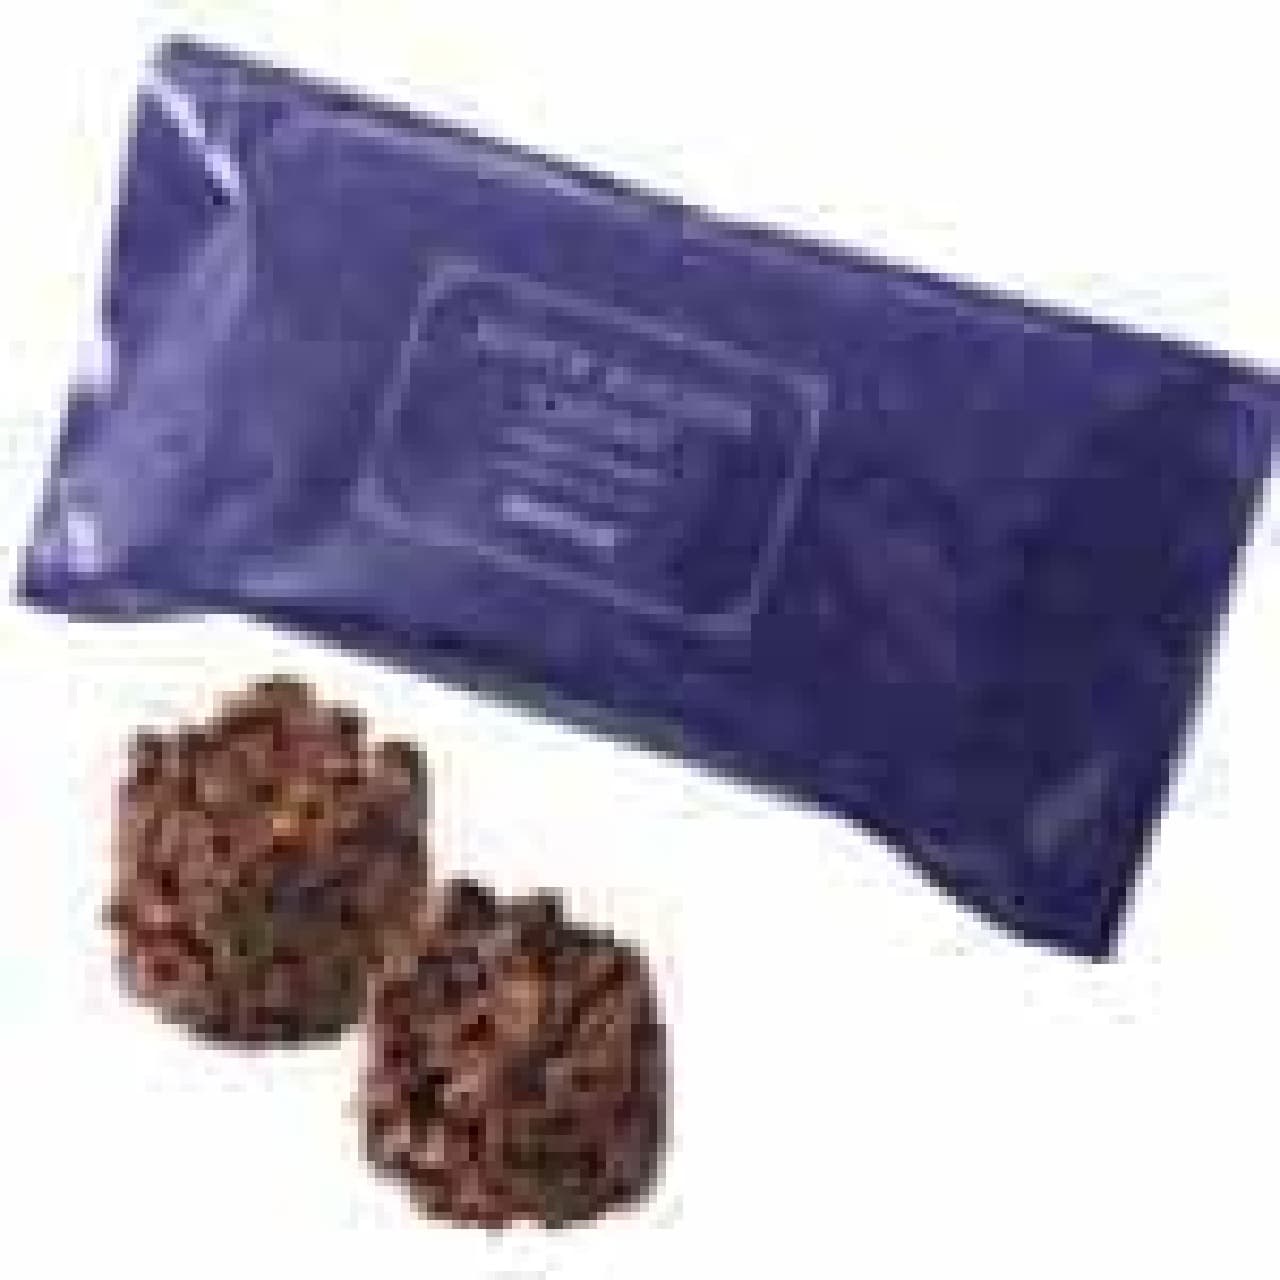 Lloyds Premium Cacao Box [Chuao]